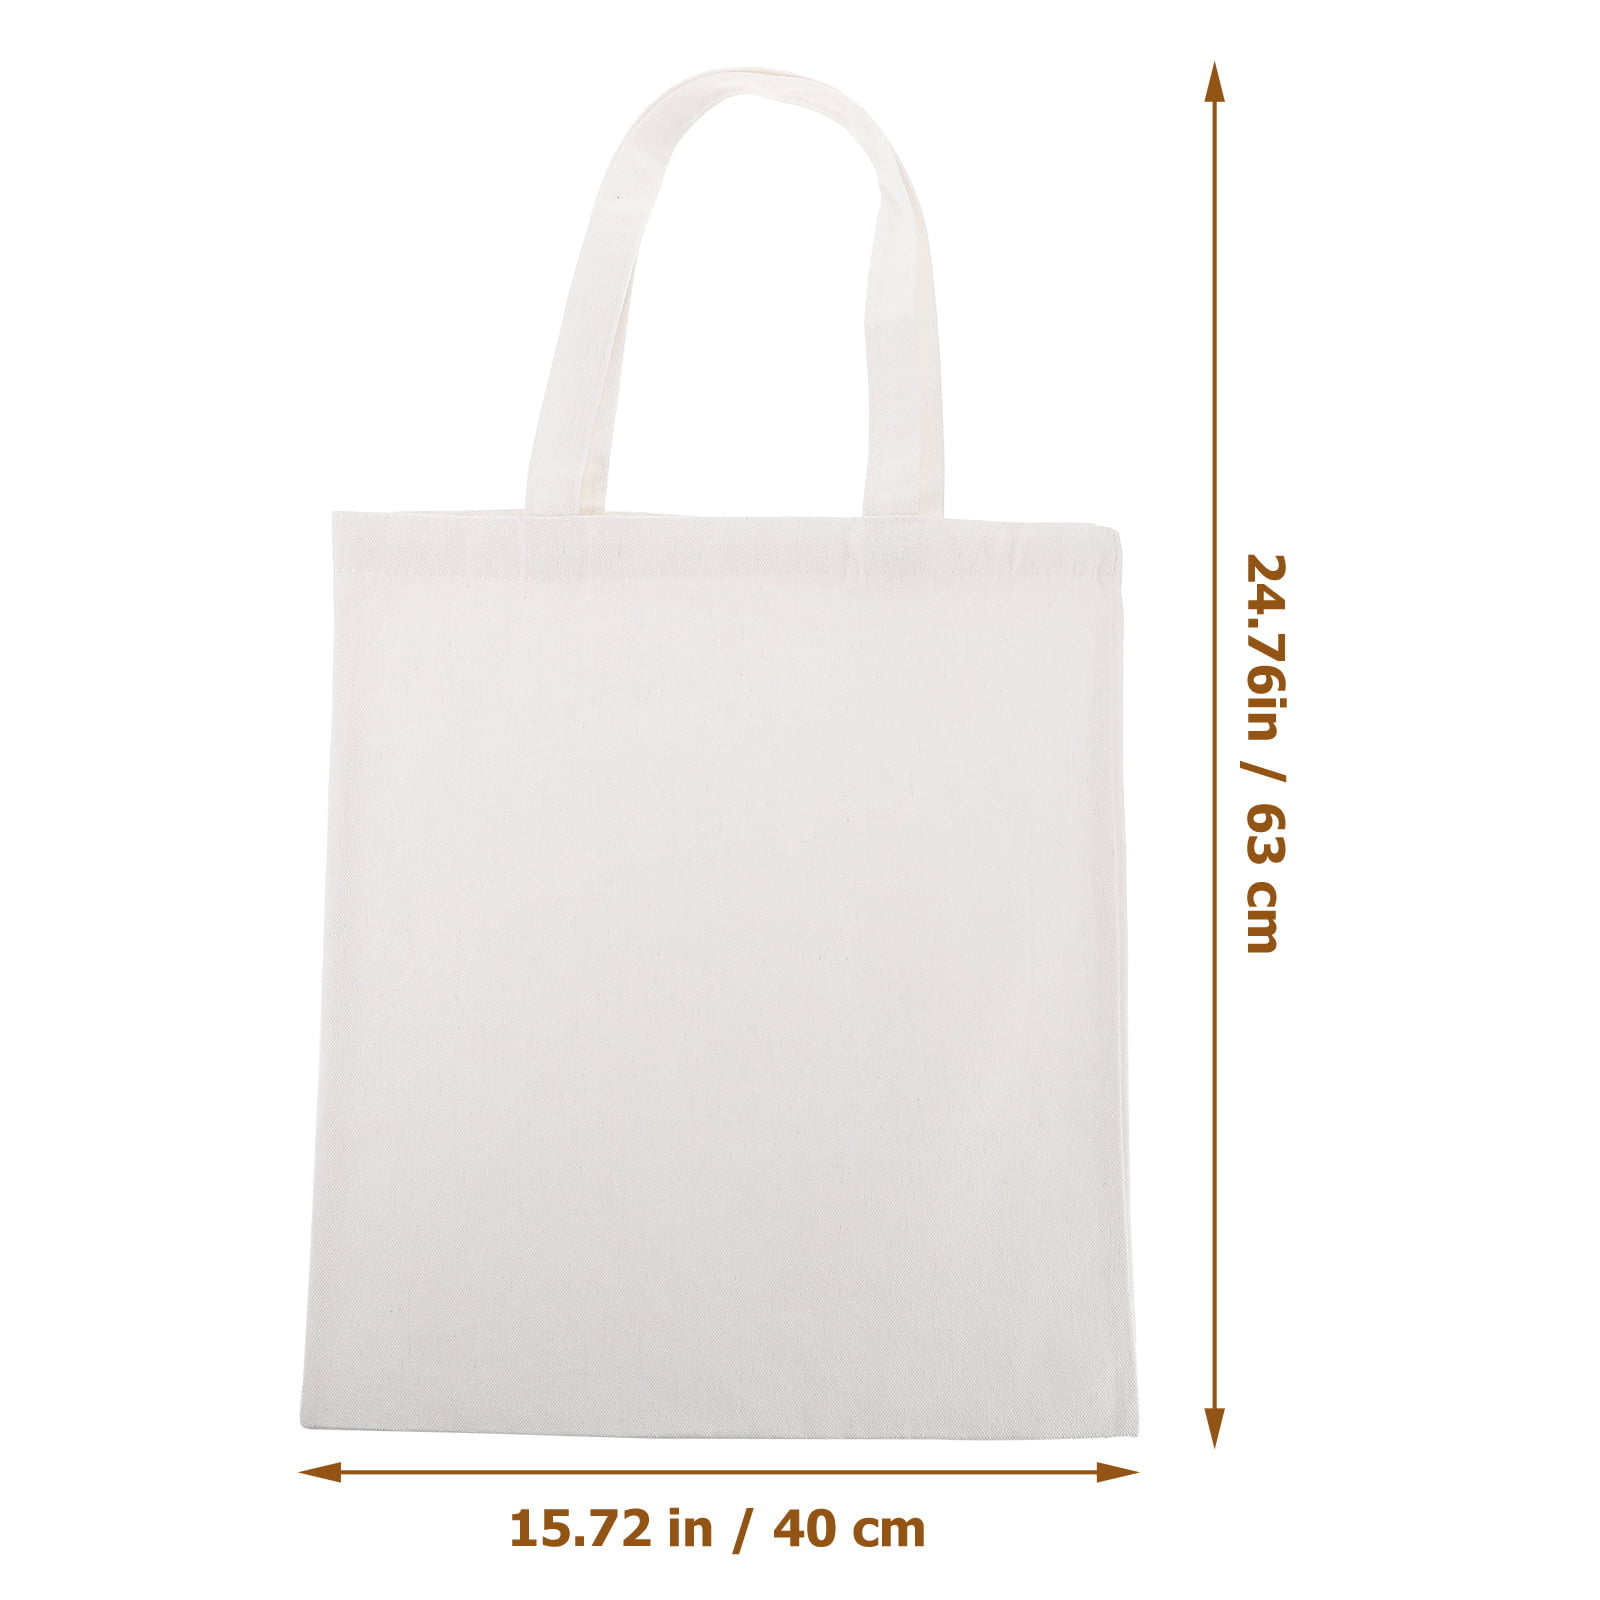 Large Non-Woven White Sublimation Tote Bag - 14.5 x 15.4 - 10/case